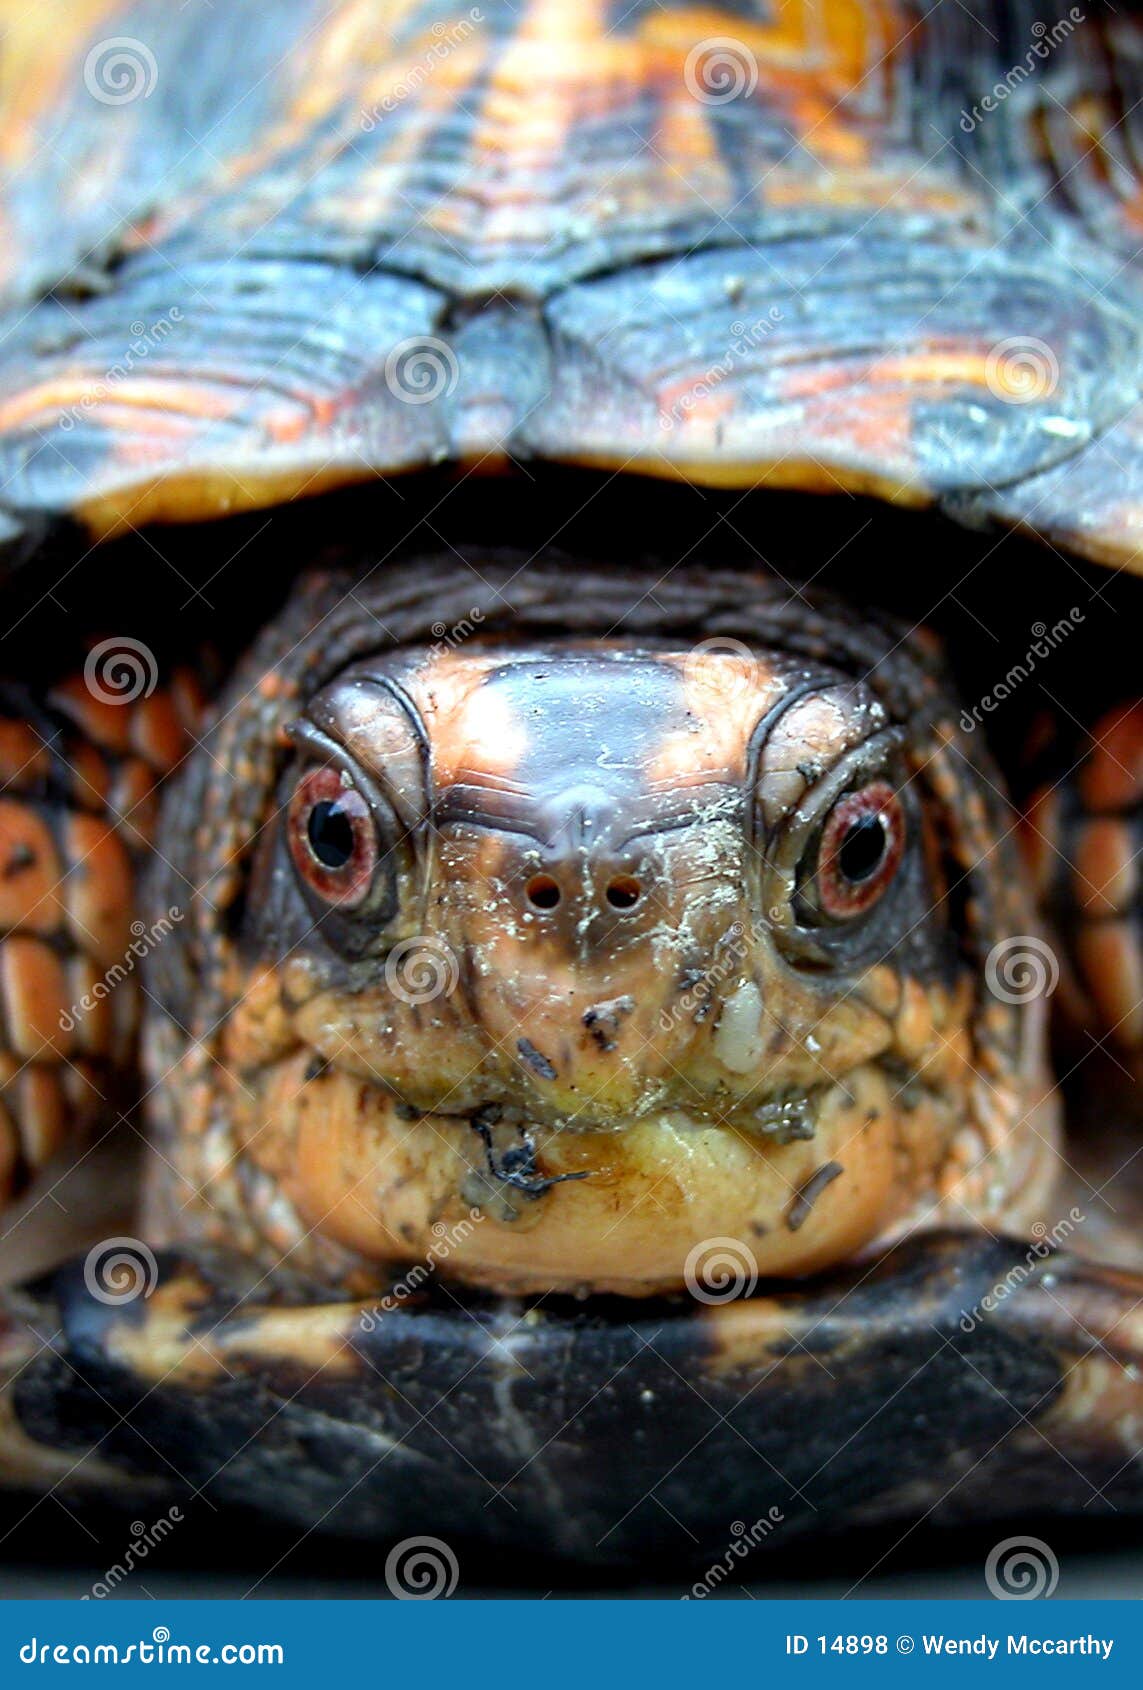 box turtle